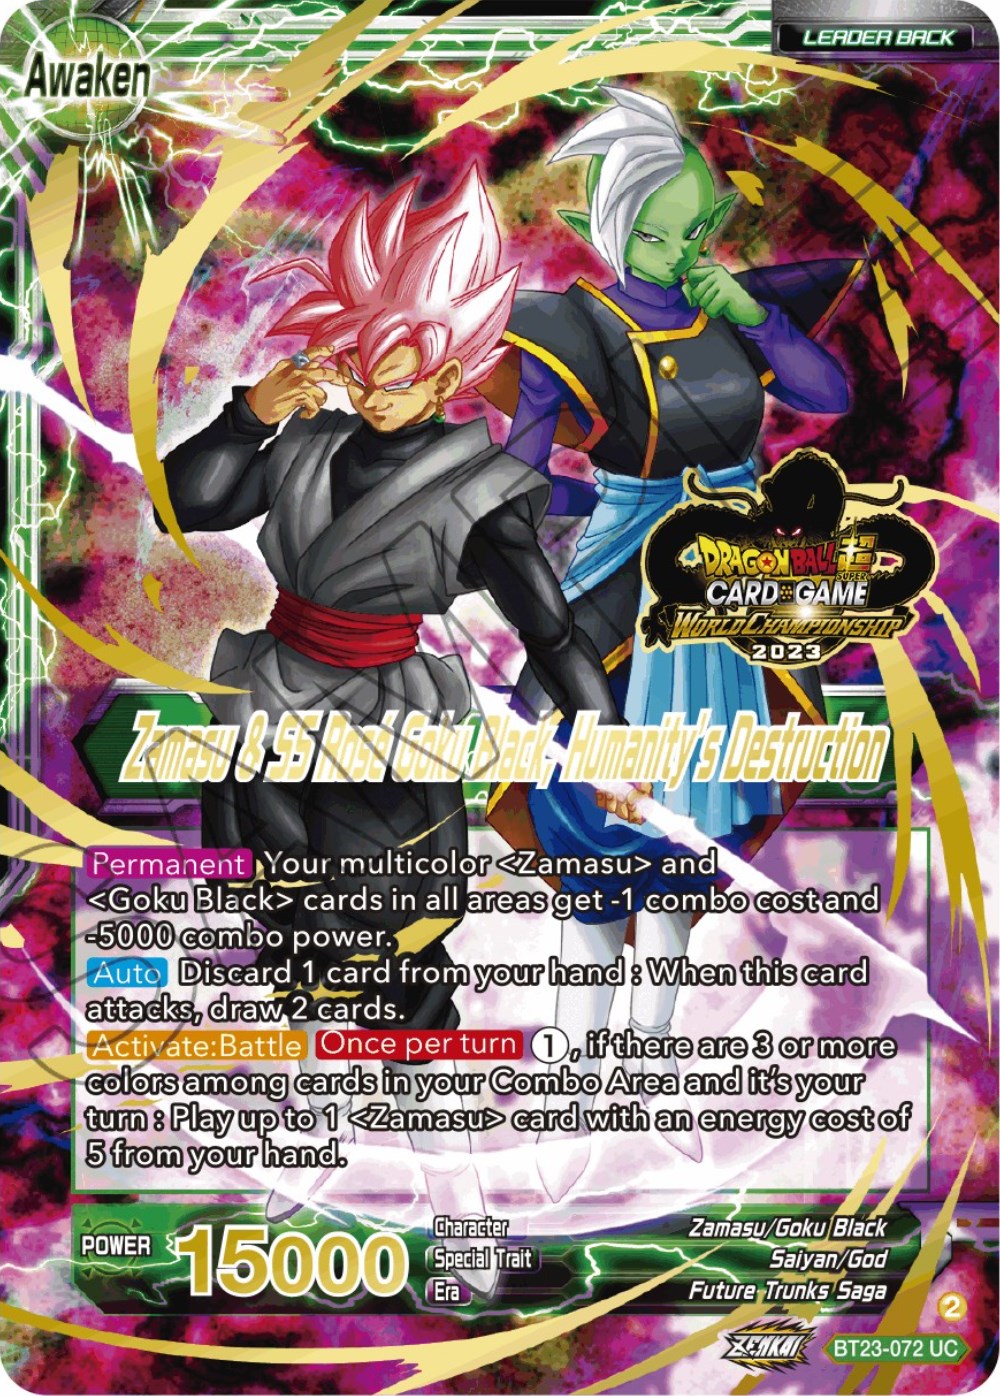 Zamasu & Goku Black // Zamasu & SS Rose Goku Black, Humanity's Destruction (2023 Worlds ZENKAI 06 Leader Set) (BT23-072) [Tournament Promotion Cards] | Amazing Games TCG